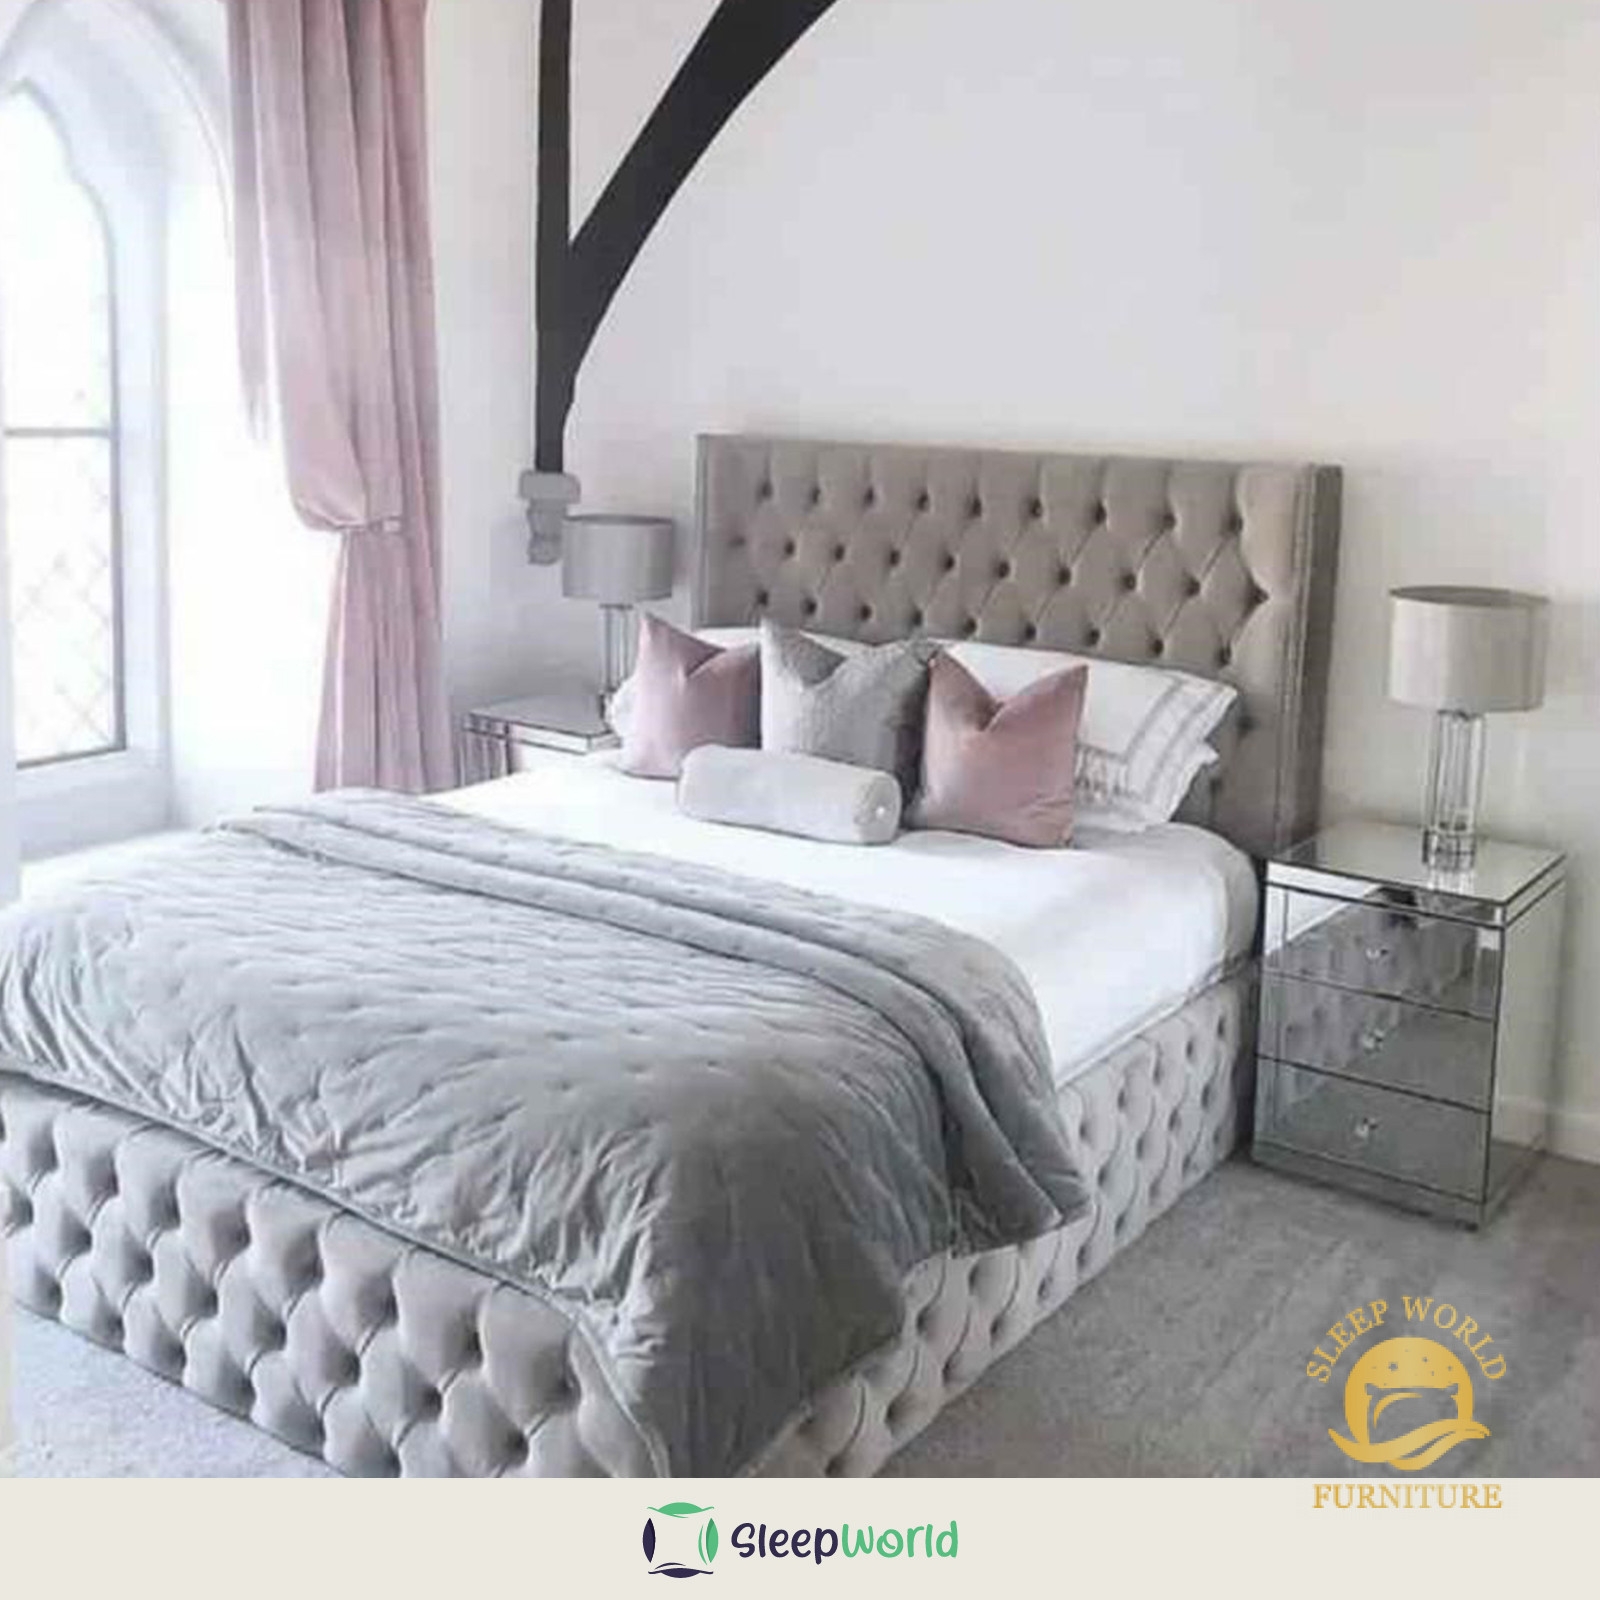 Milano Wing Bed – Super King – 6FT – Gas Lift Ottoman Base – Optional Mattress – Upholstered – Sleep World Furniture